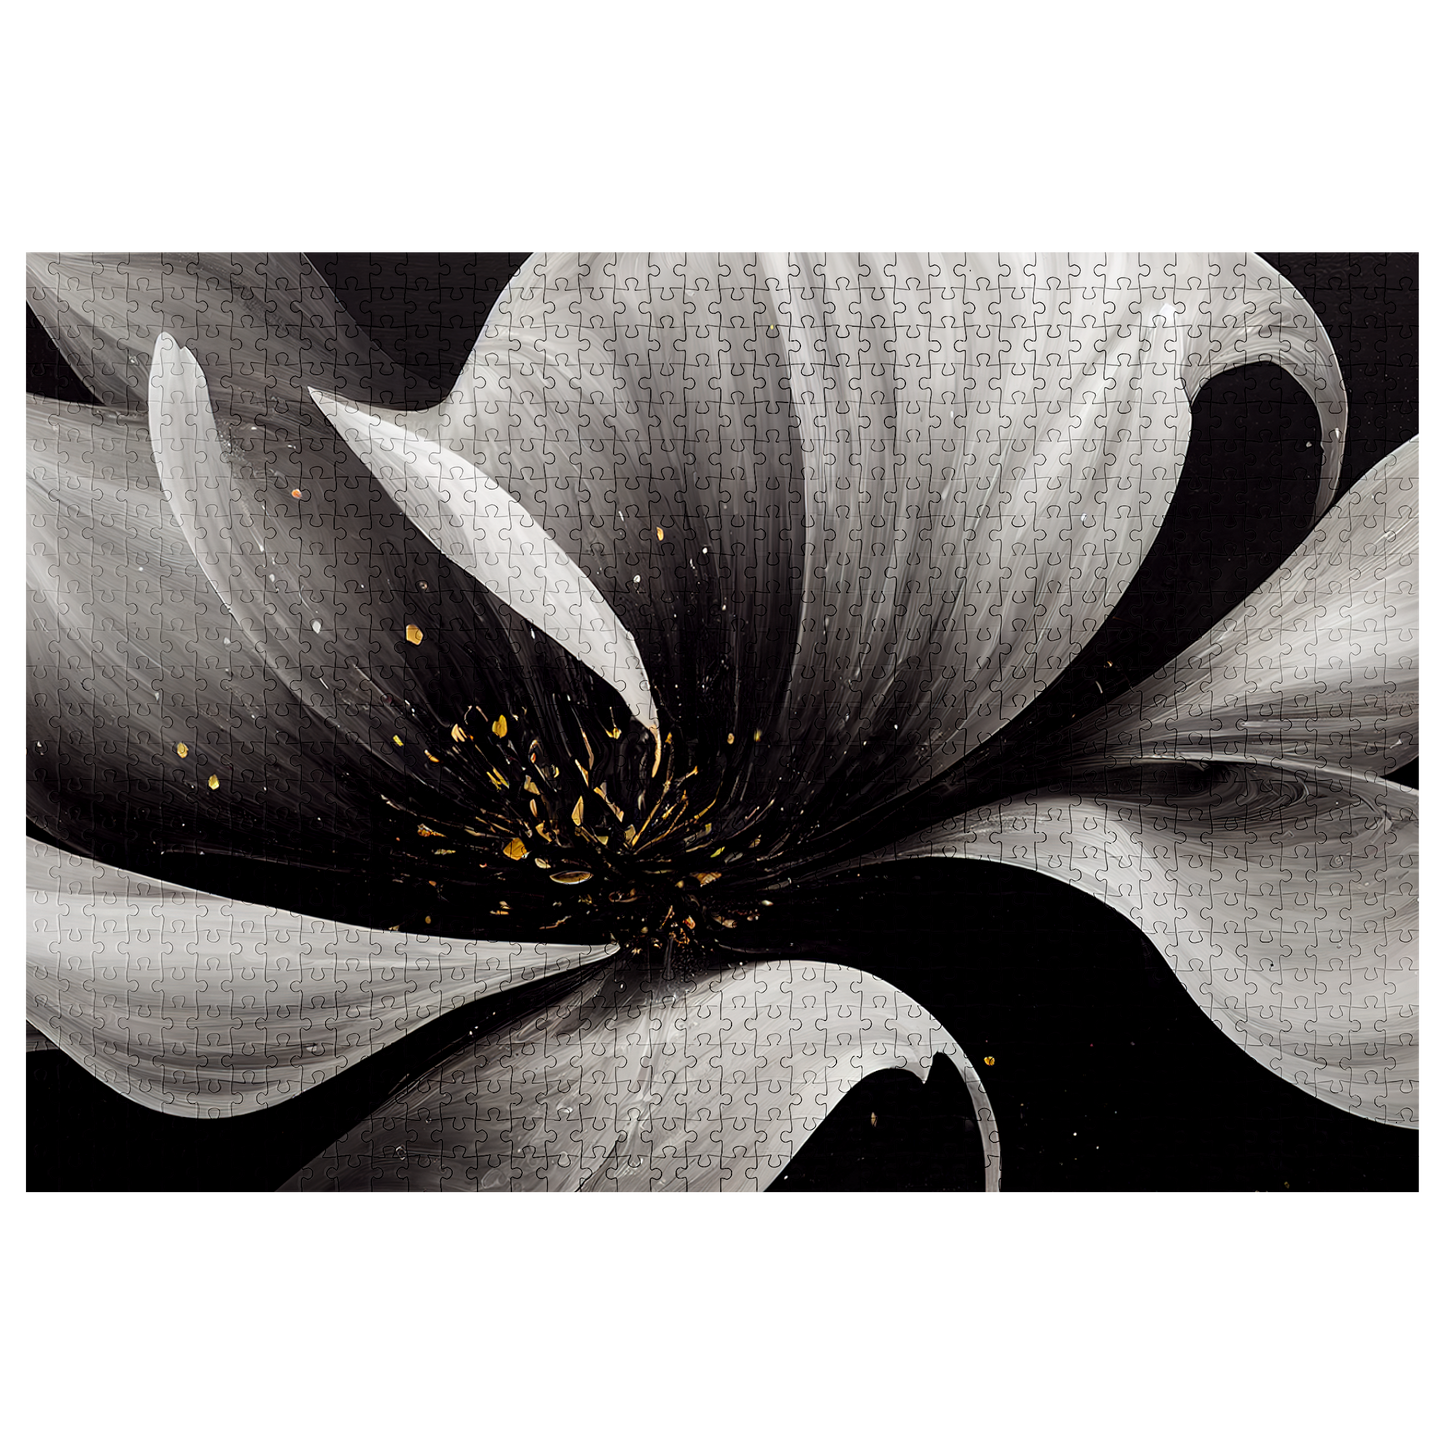 Pollen - Premium Jigsaw Puzzle - Floral, Accent, Decore, Modern - Multiple Sizes Available